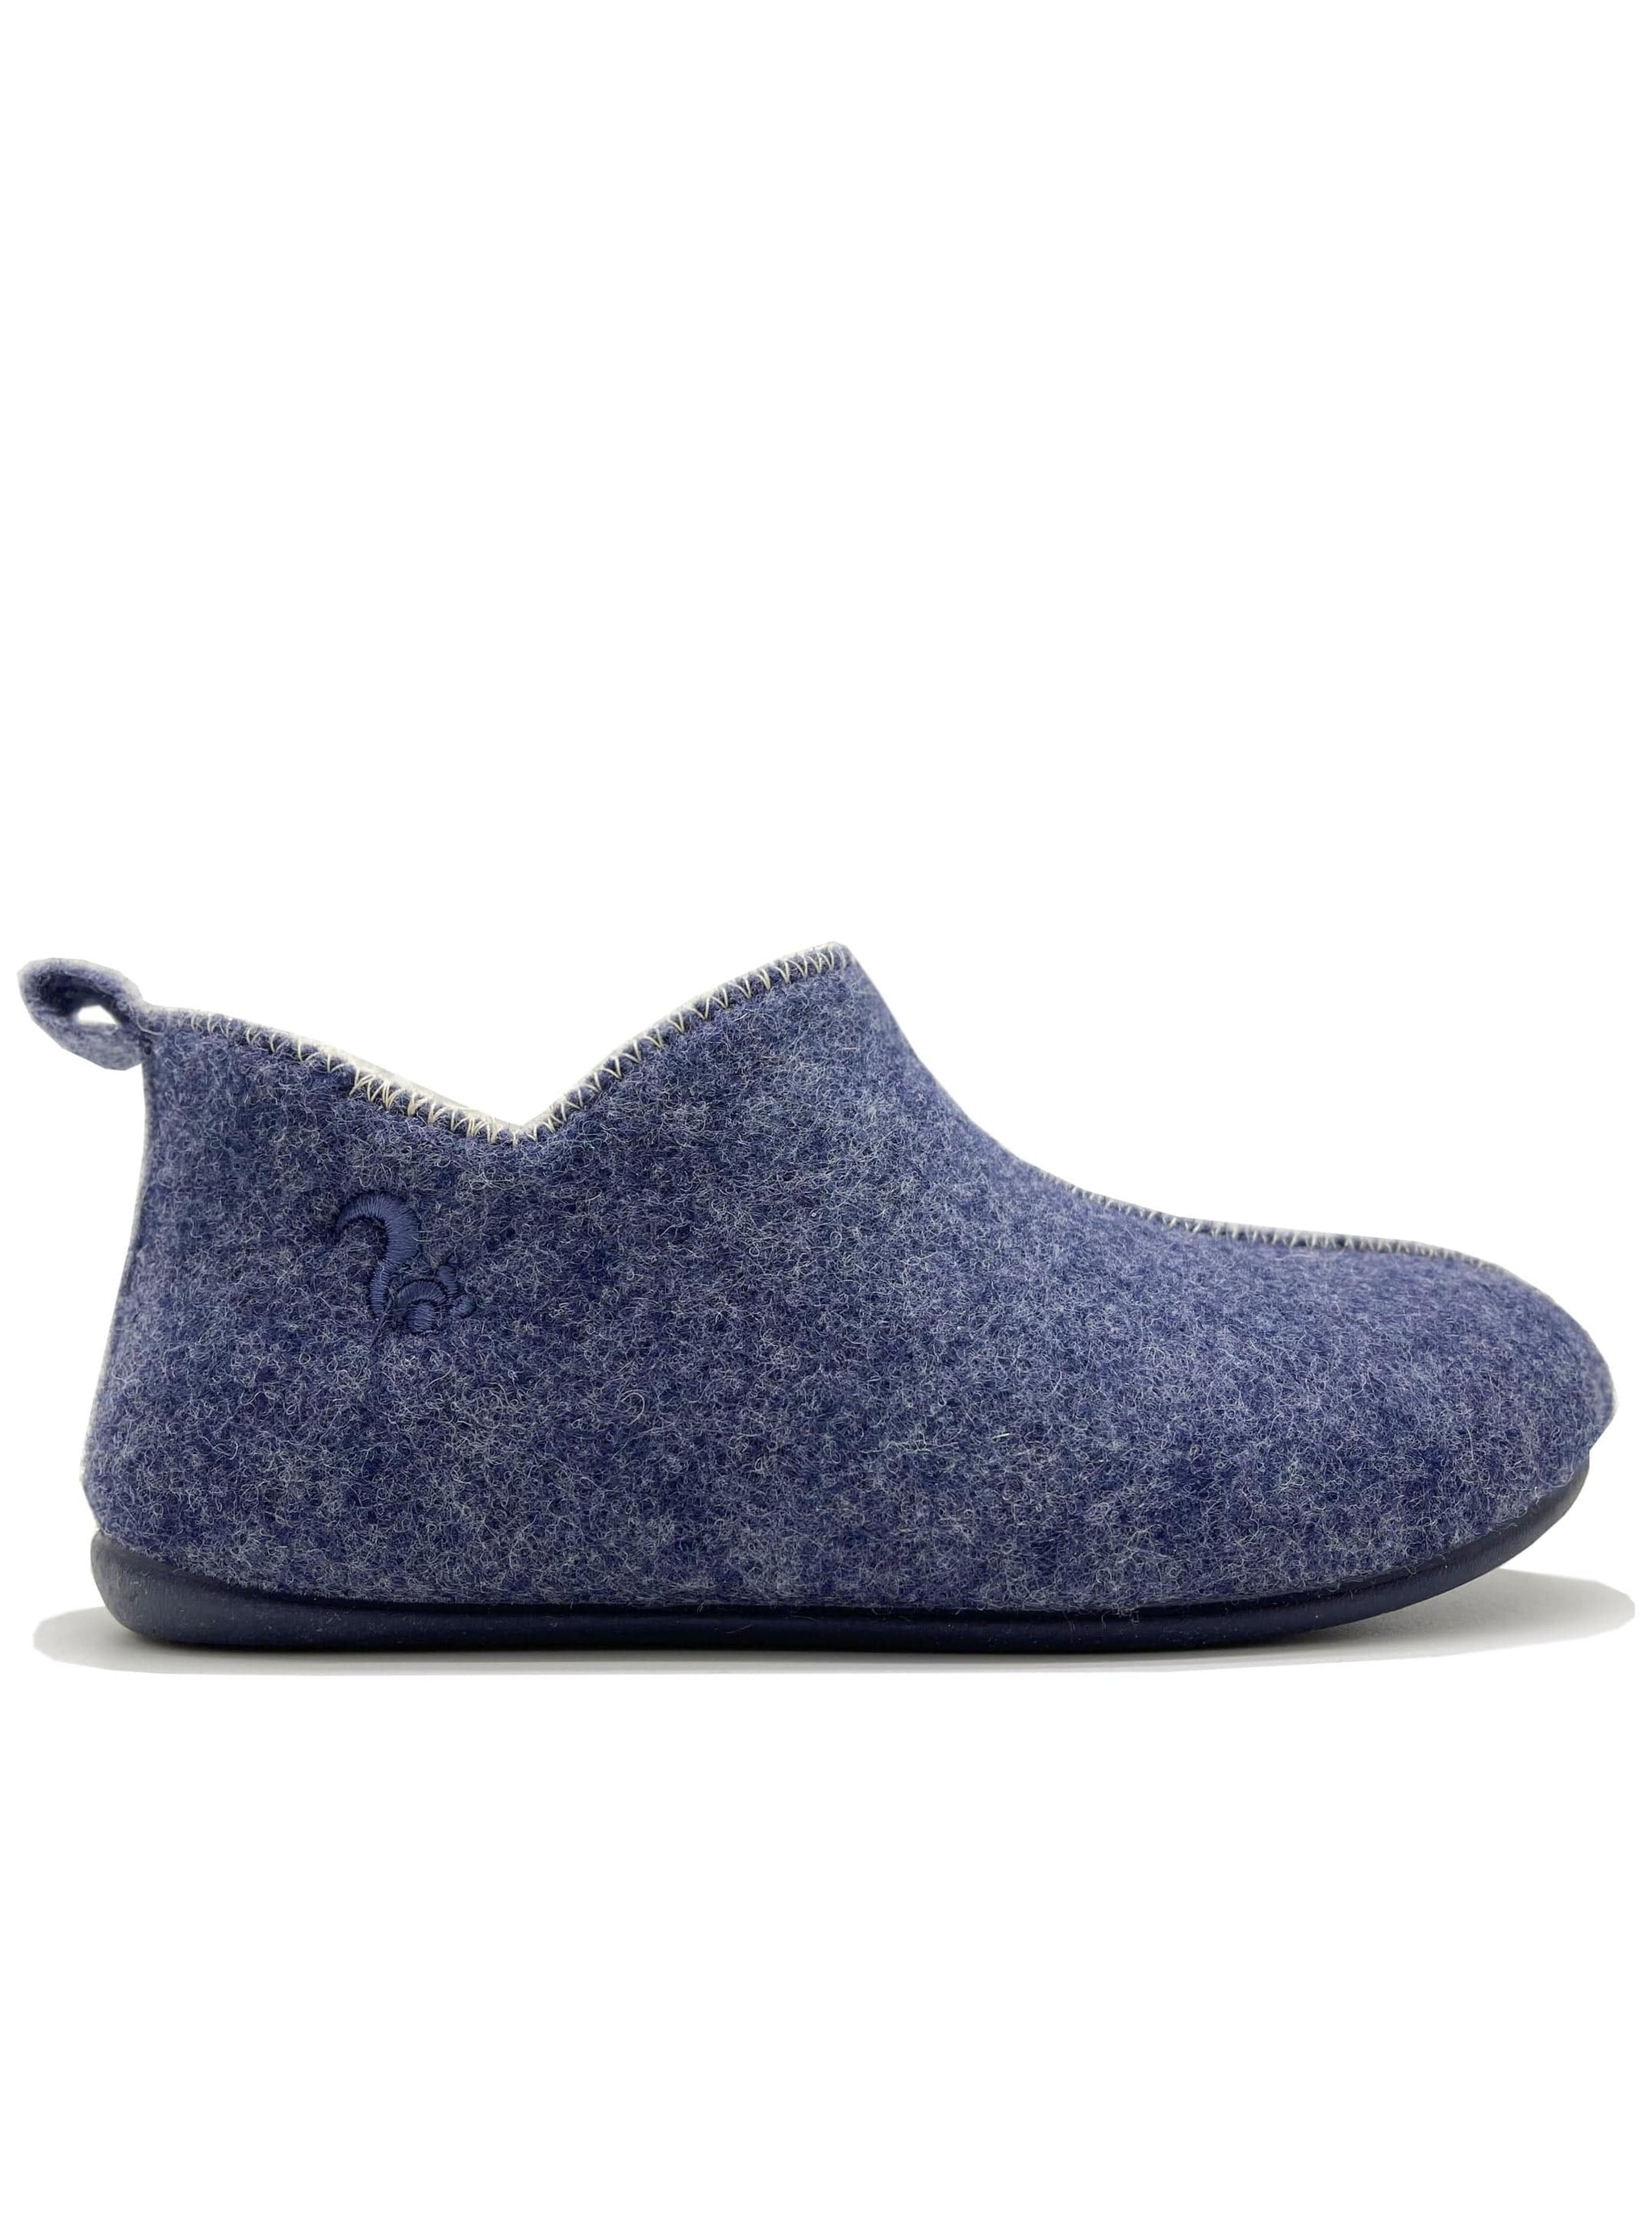 Calzado NAT 2 Slipper Boots en Eco Wool (W) moda sostenible moda ética